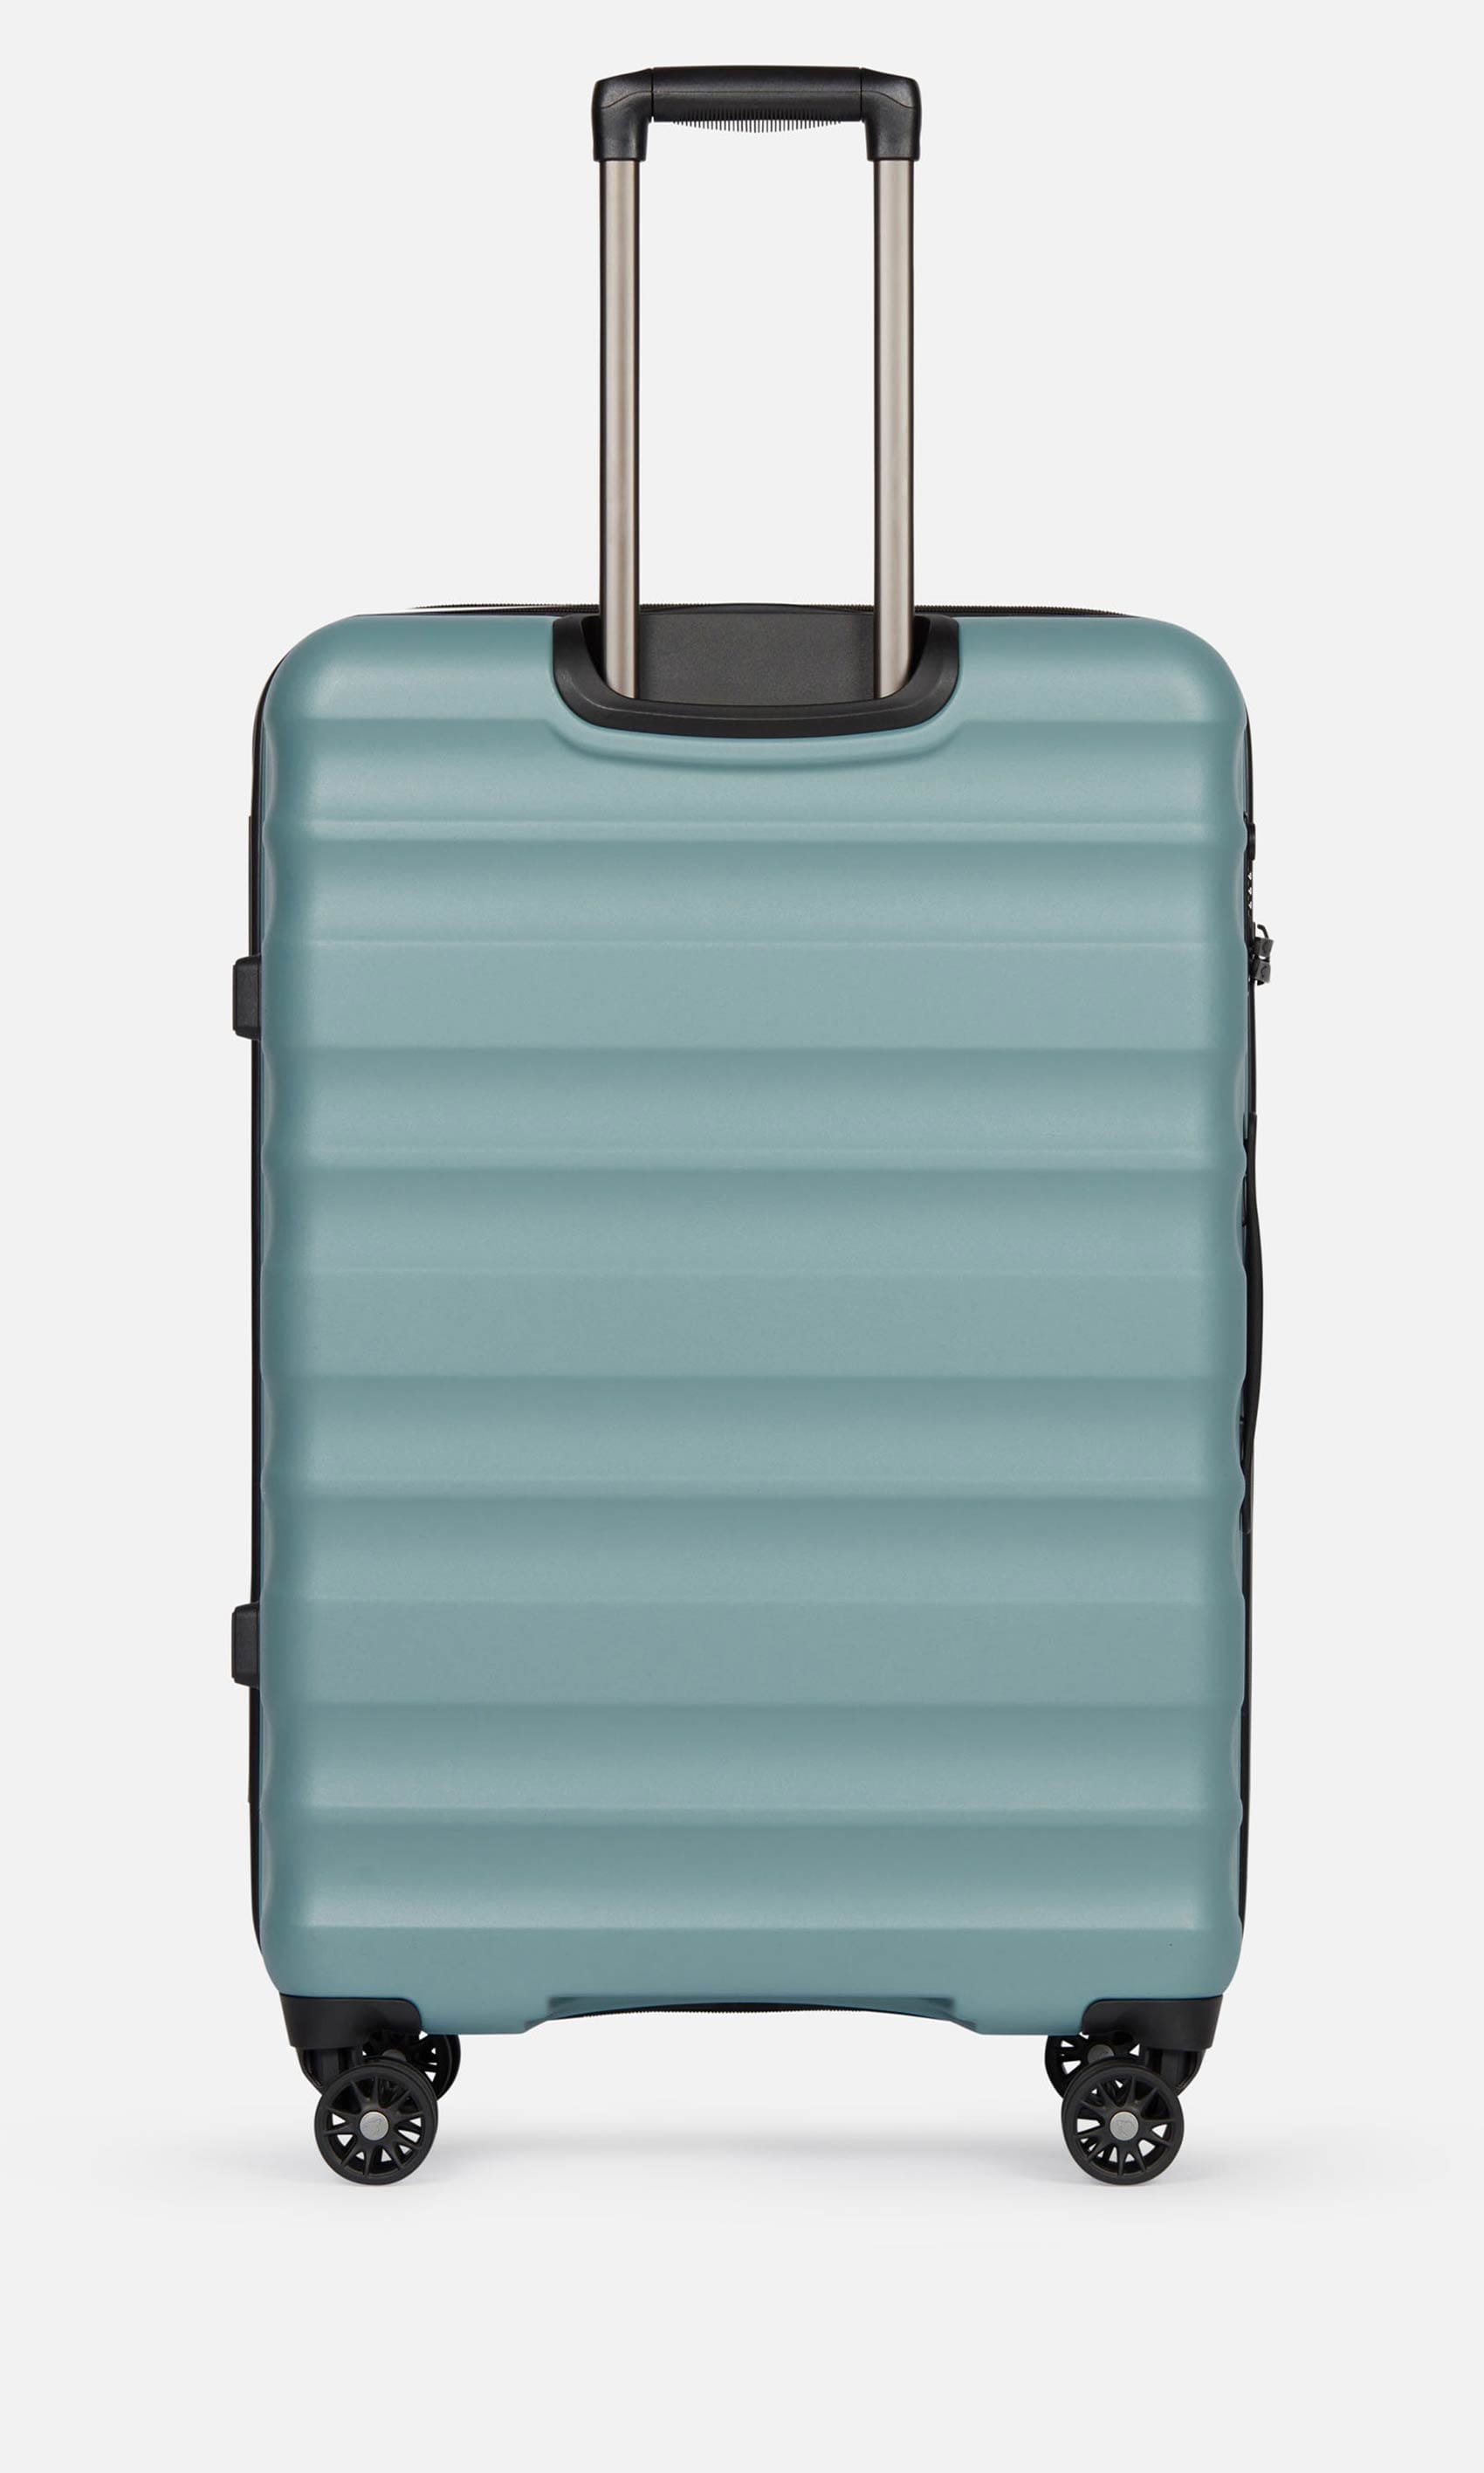 Antler Luggage -  Clifton set in mineral - Hard Suitcases Clifton Set of 3 Suitcases Mineral (Blue) | Hard Suitcase | Antler UK